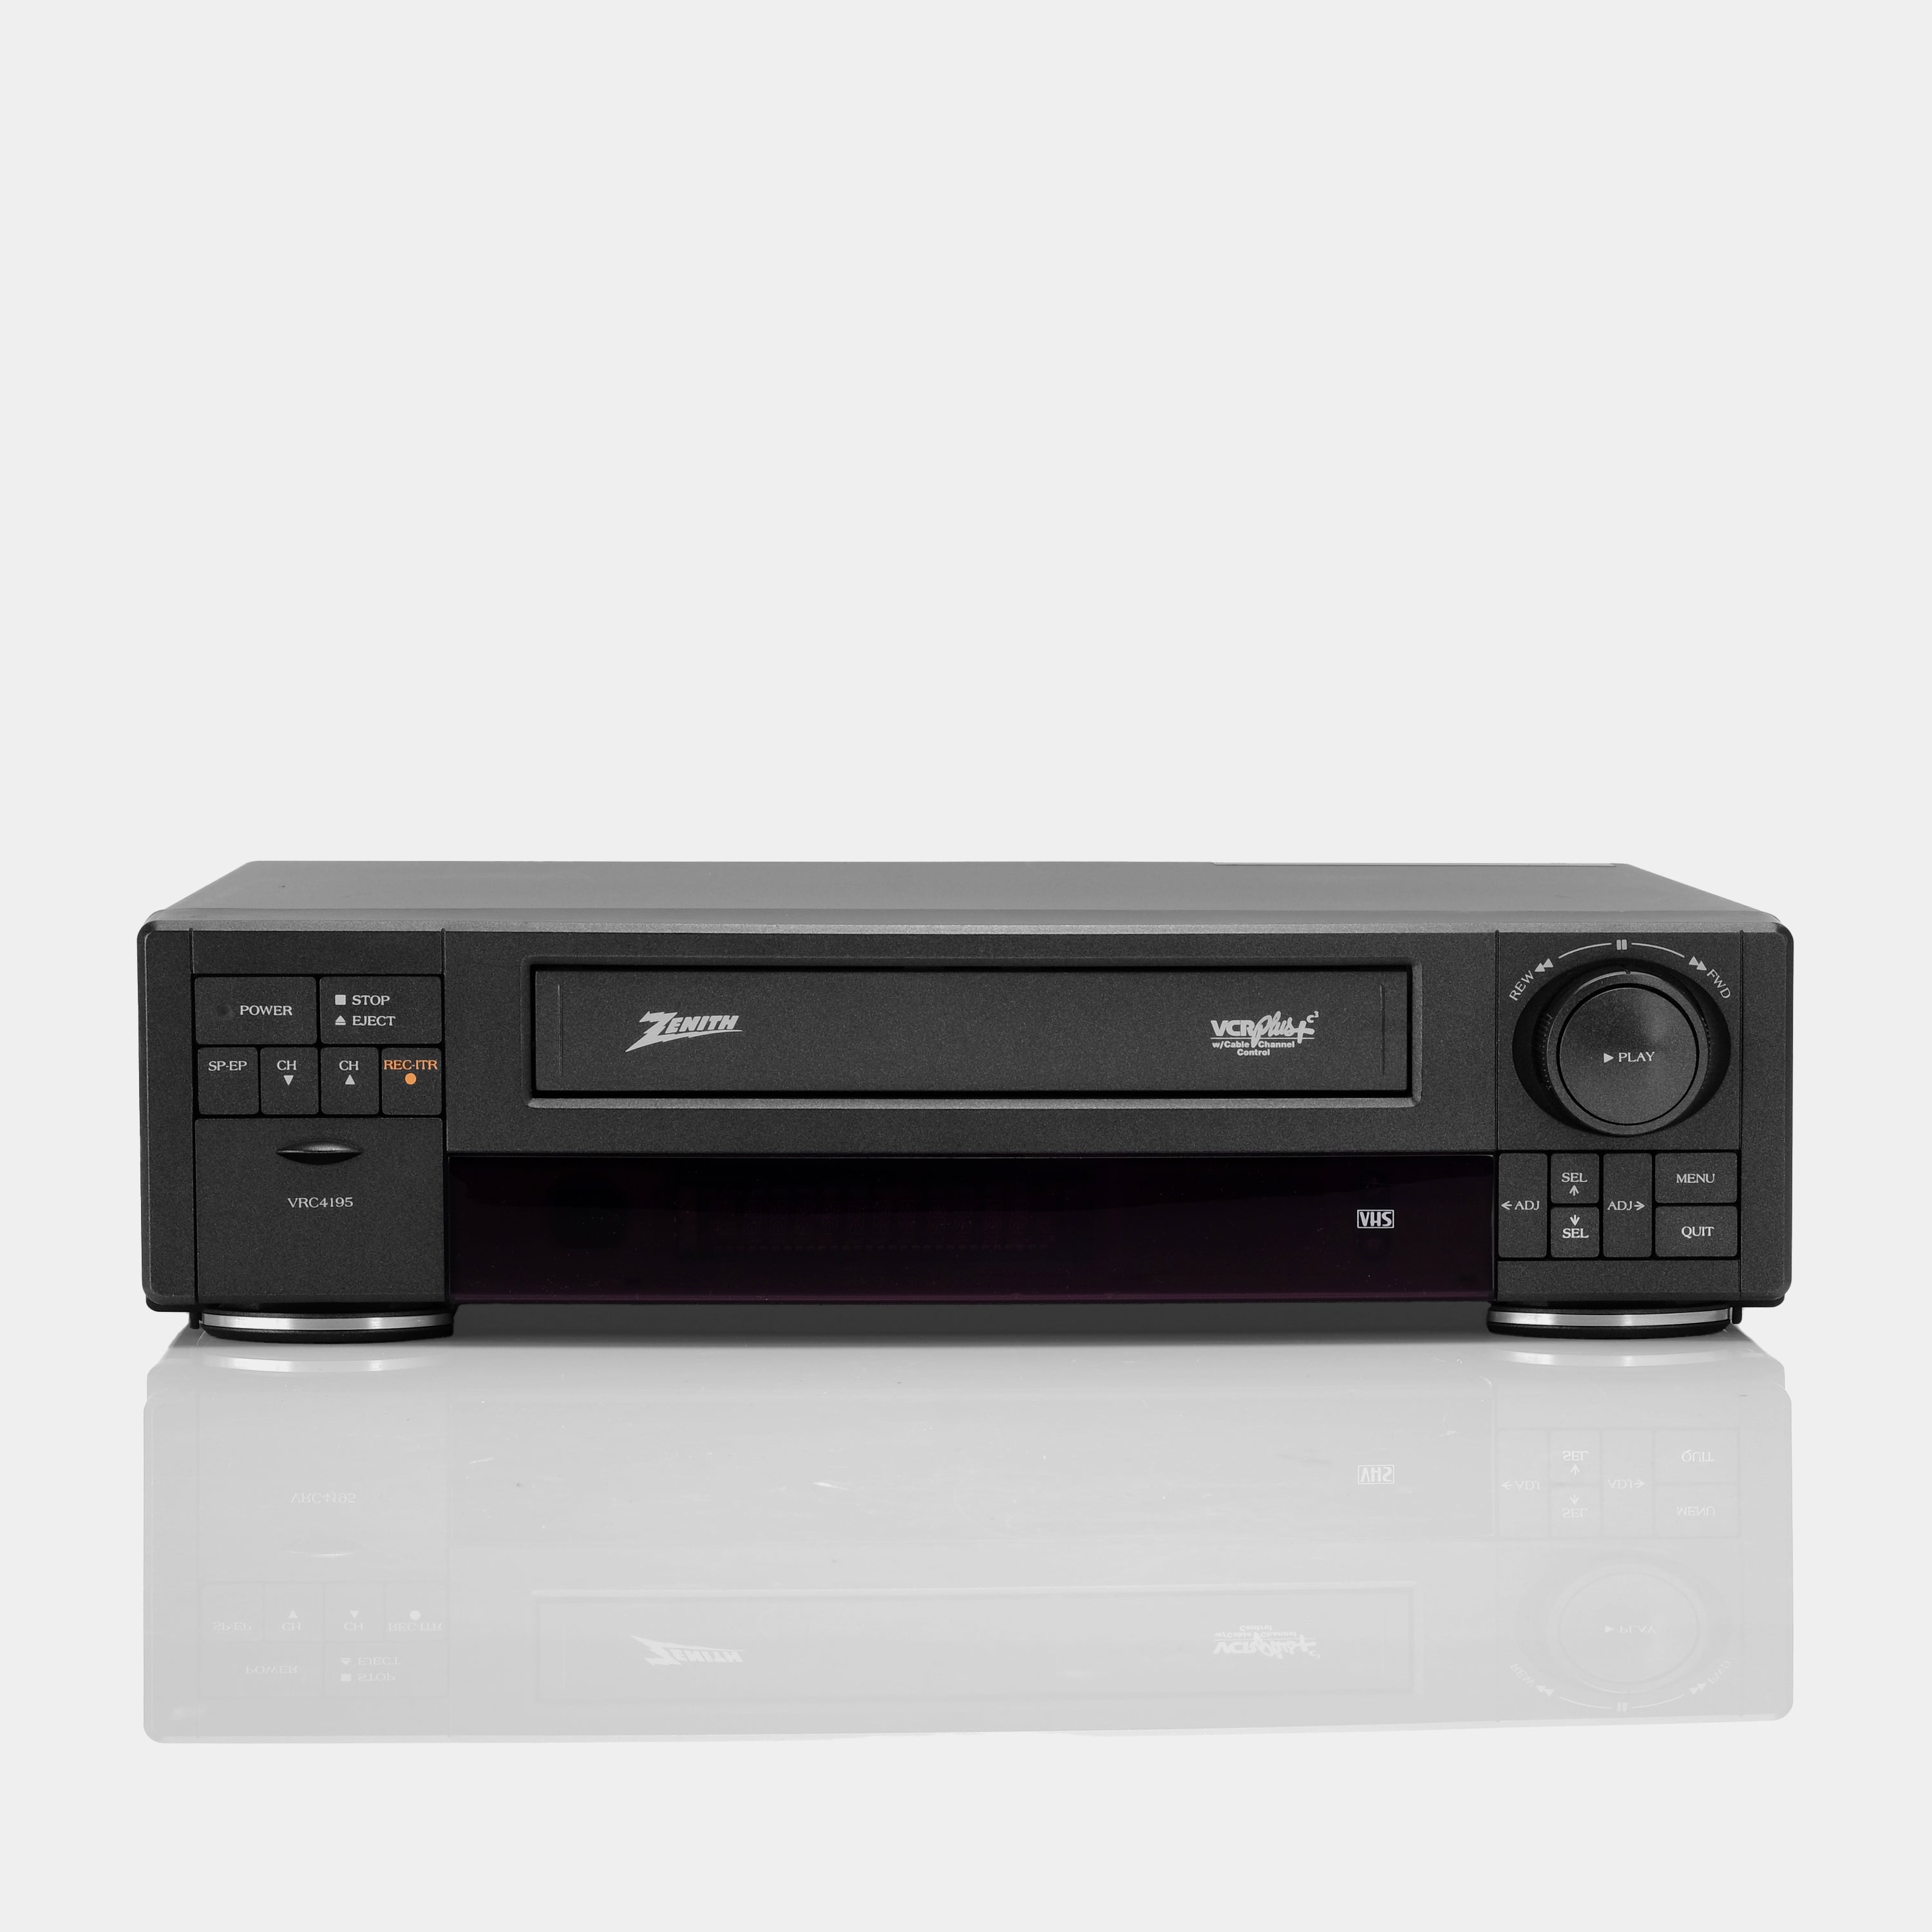 Zenith VRC4195 VCR VHS Player